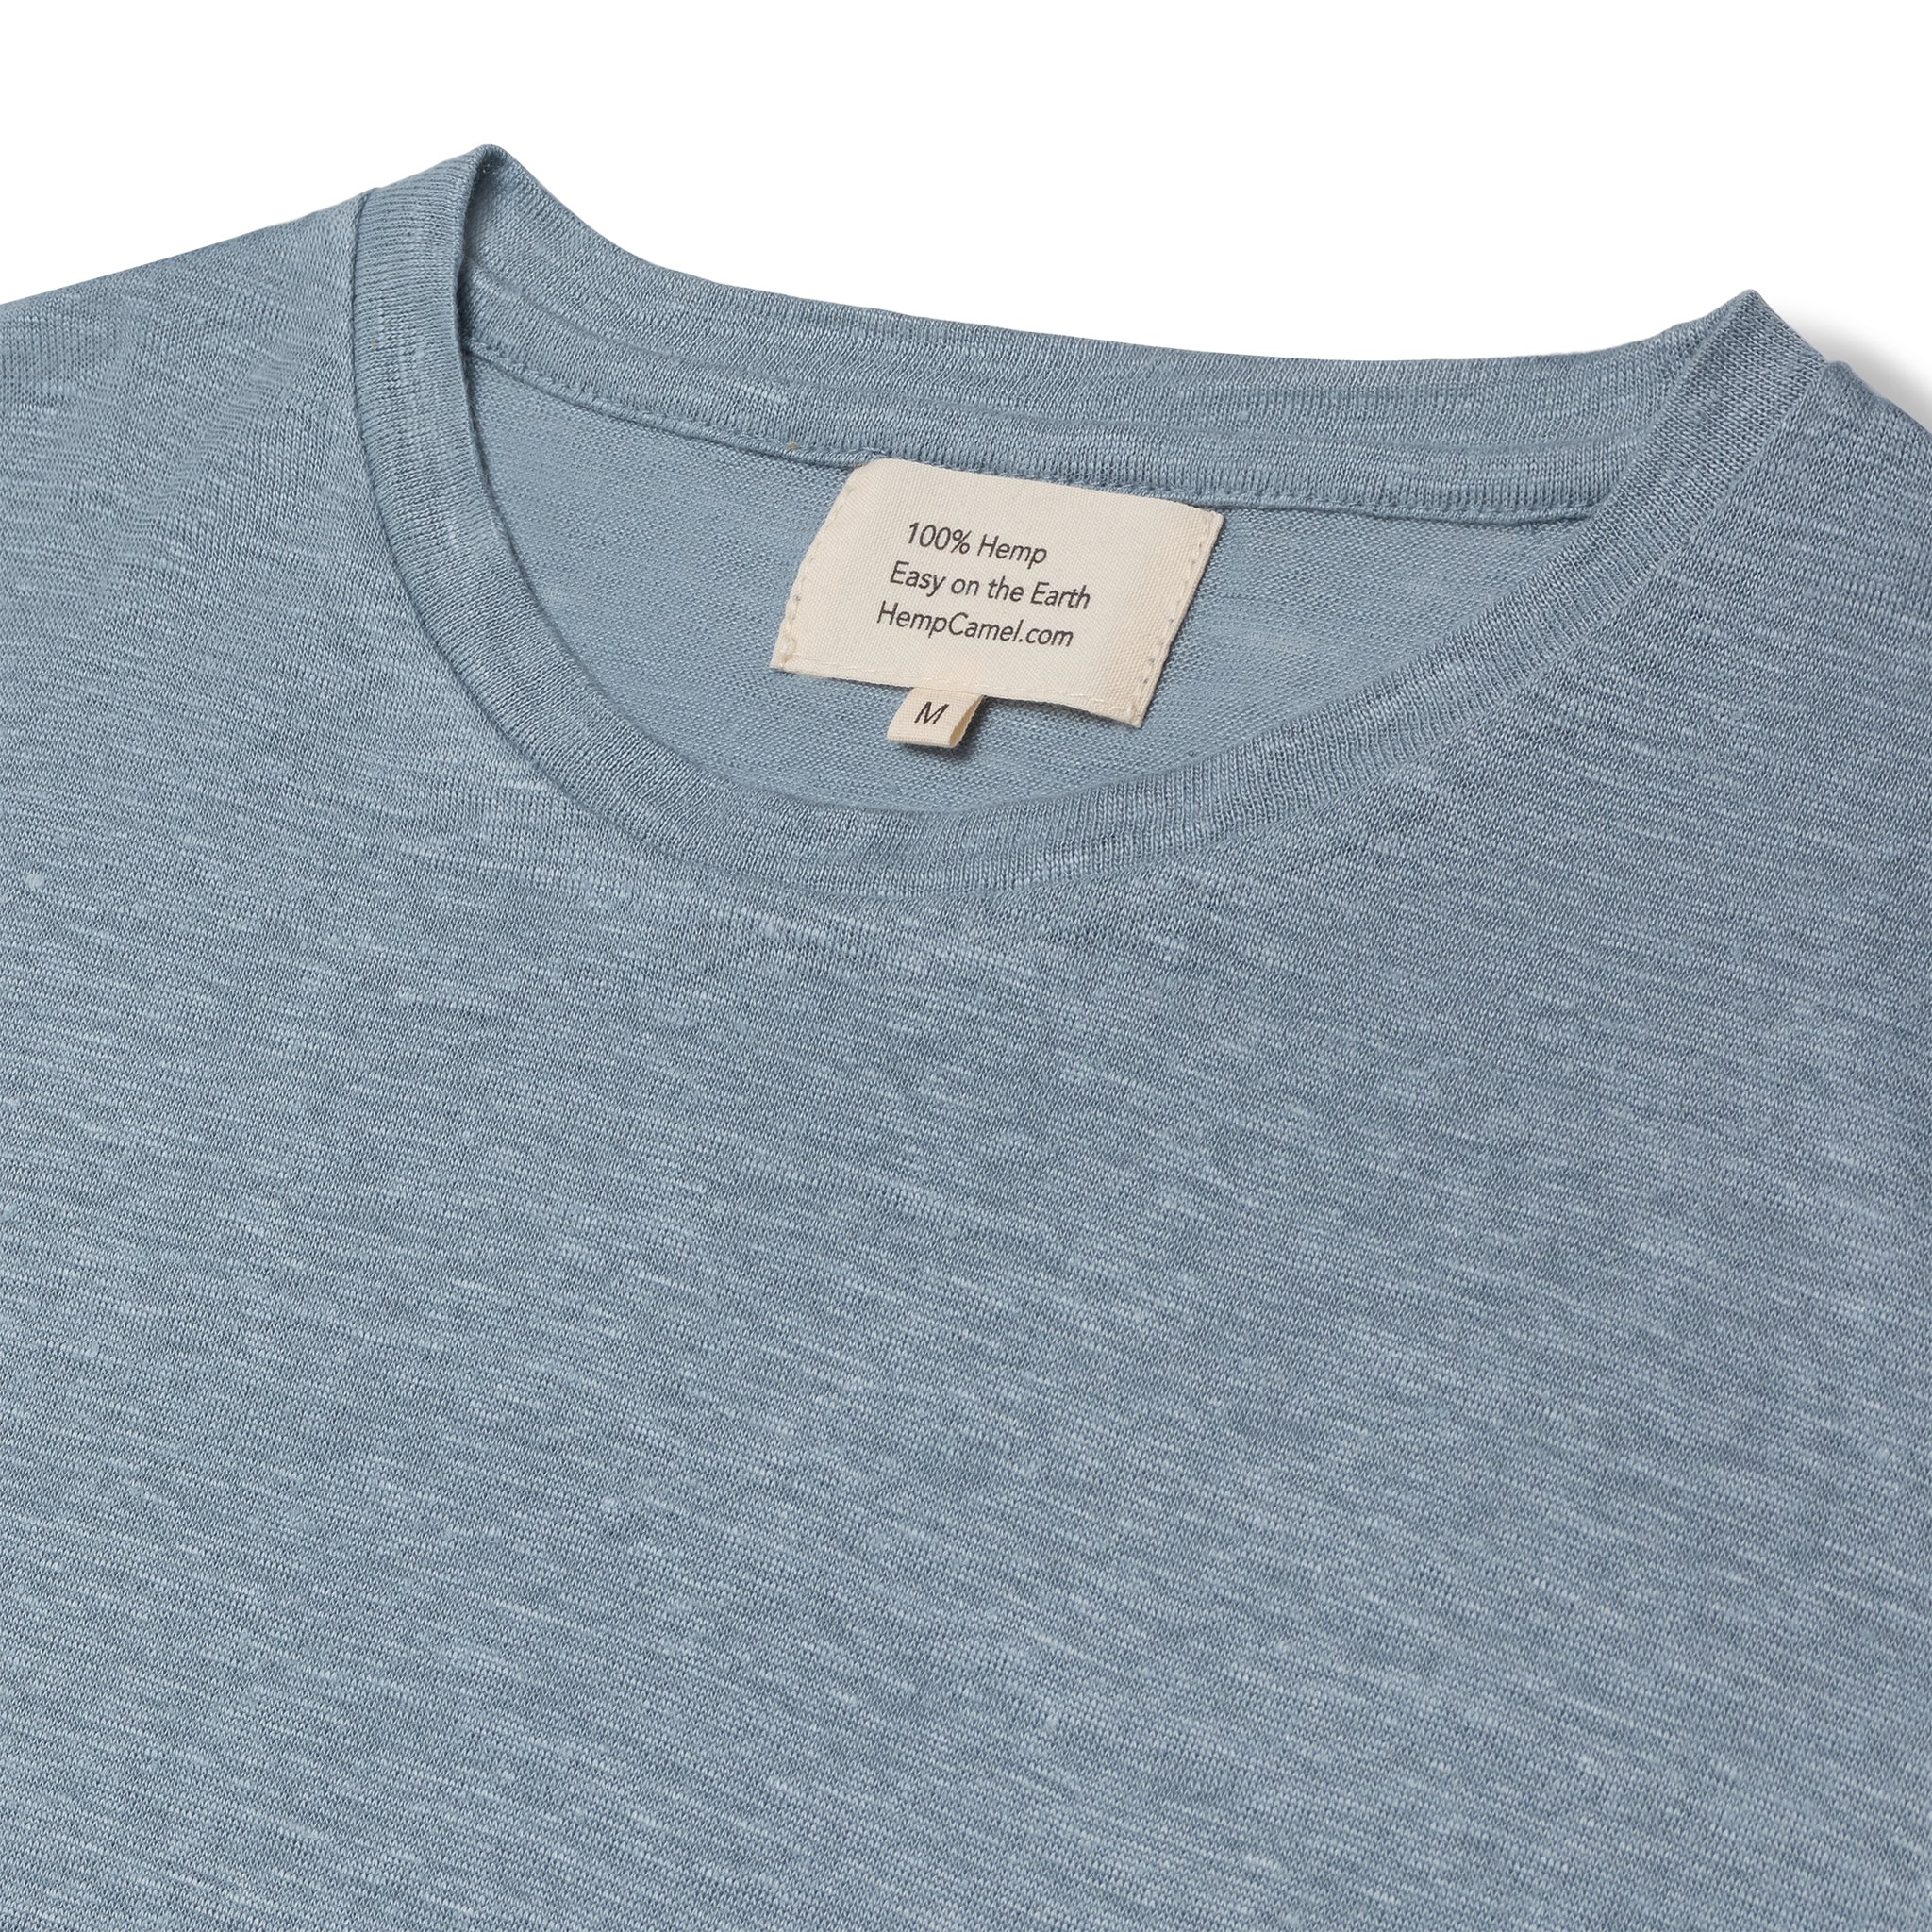 100% Organic Hemp T-shirt by Rawganique since 1997 (Chemical-free)